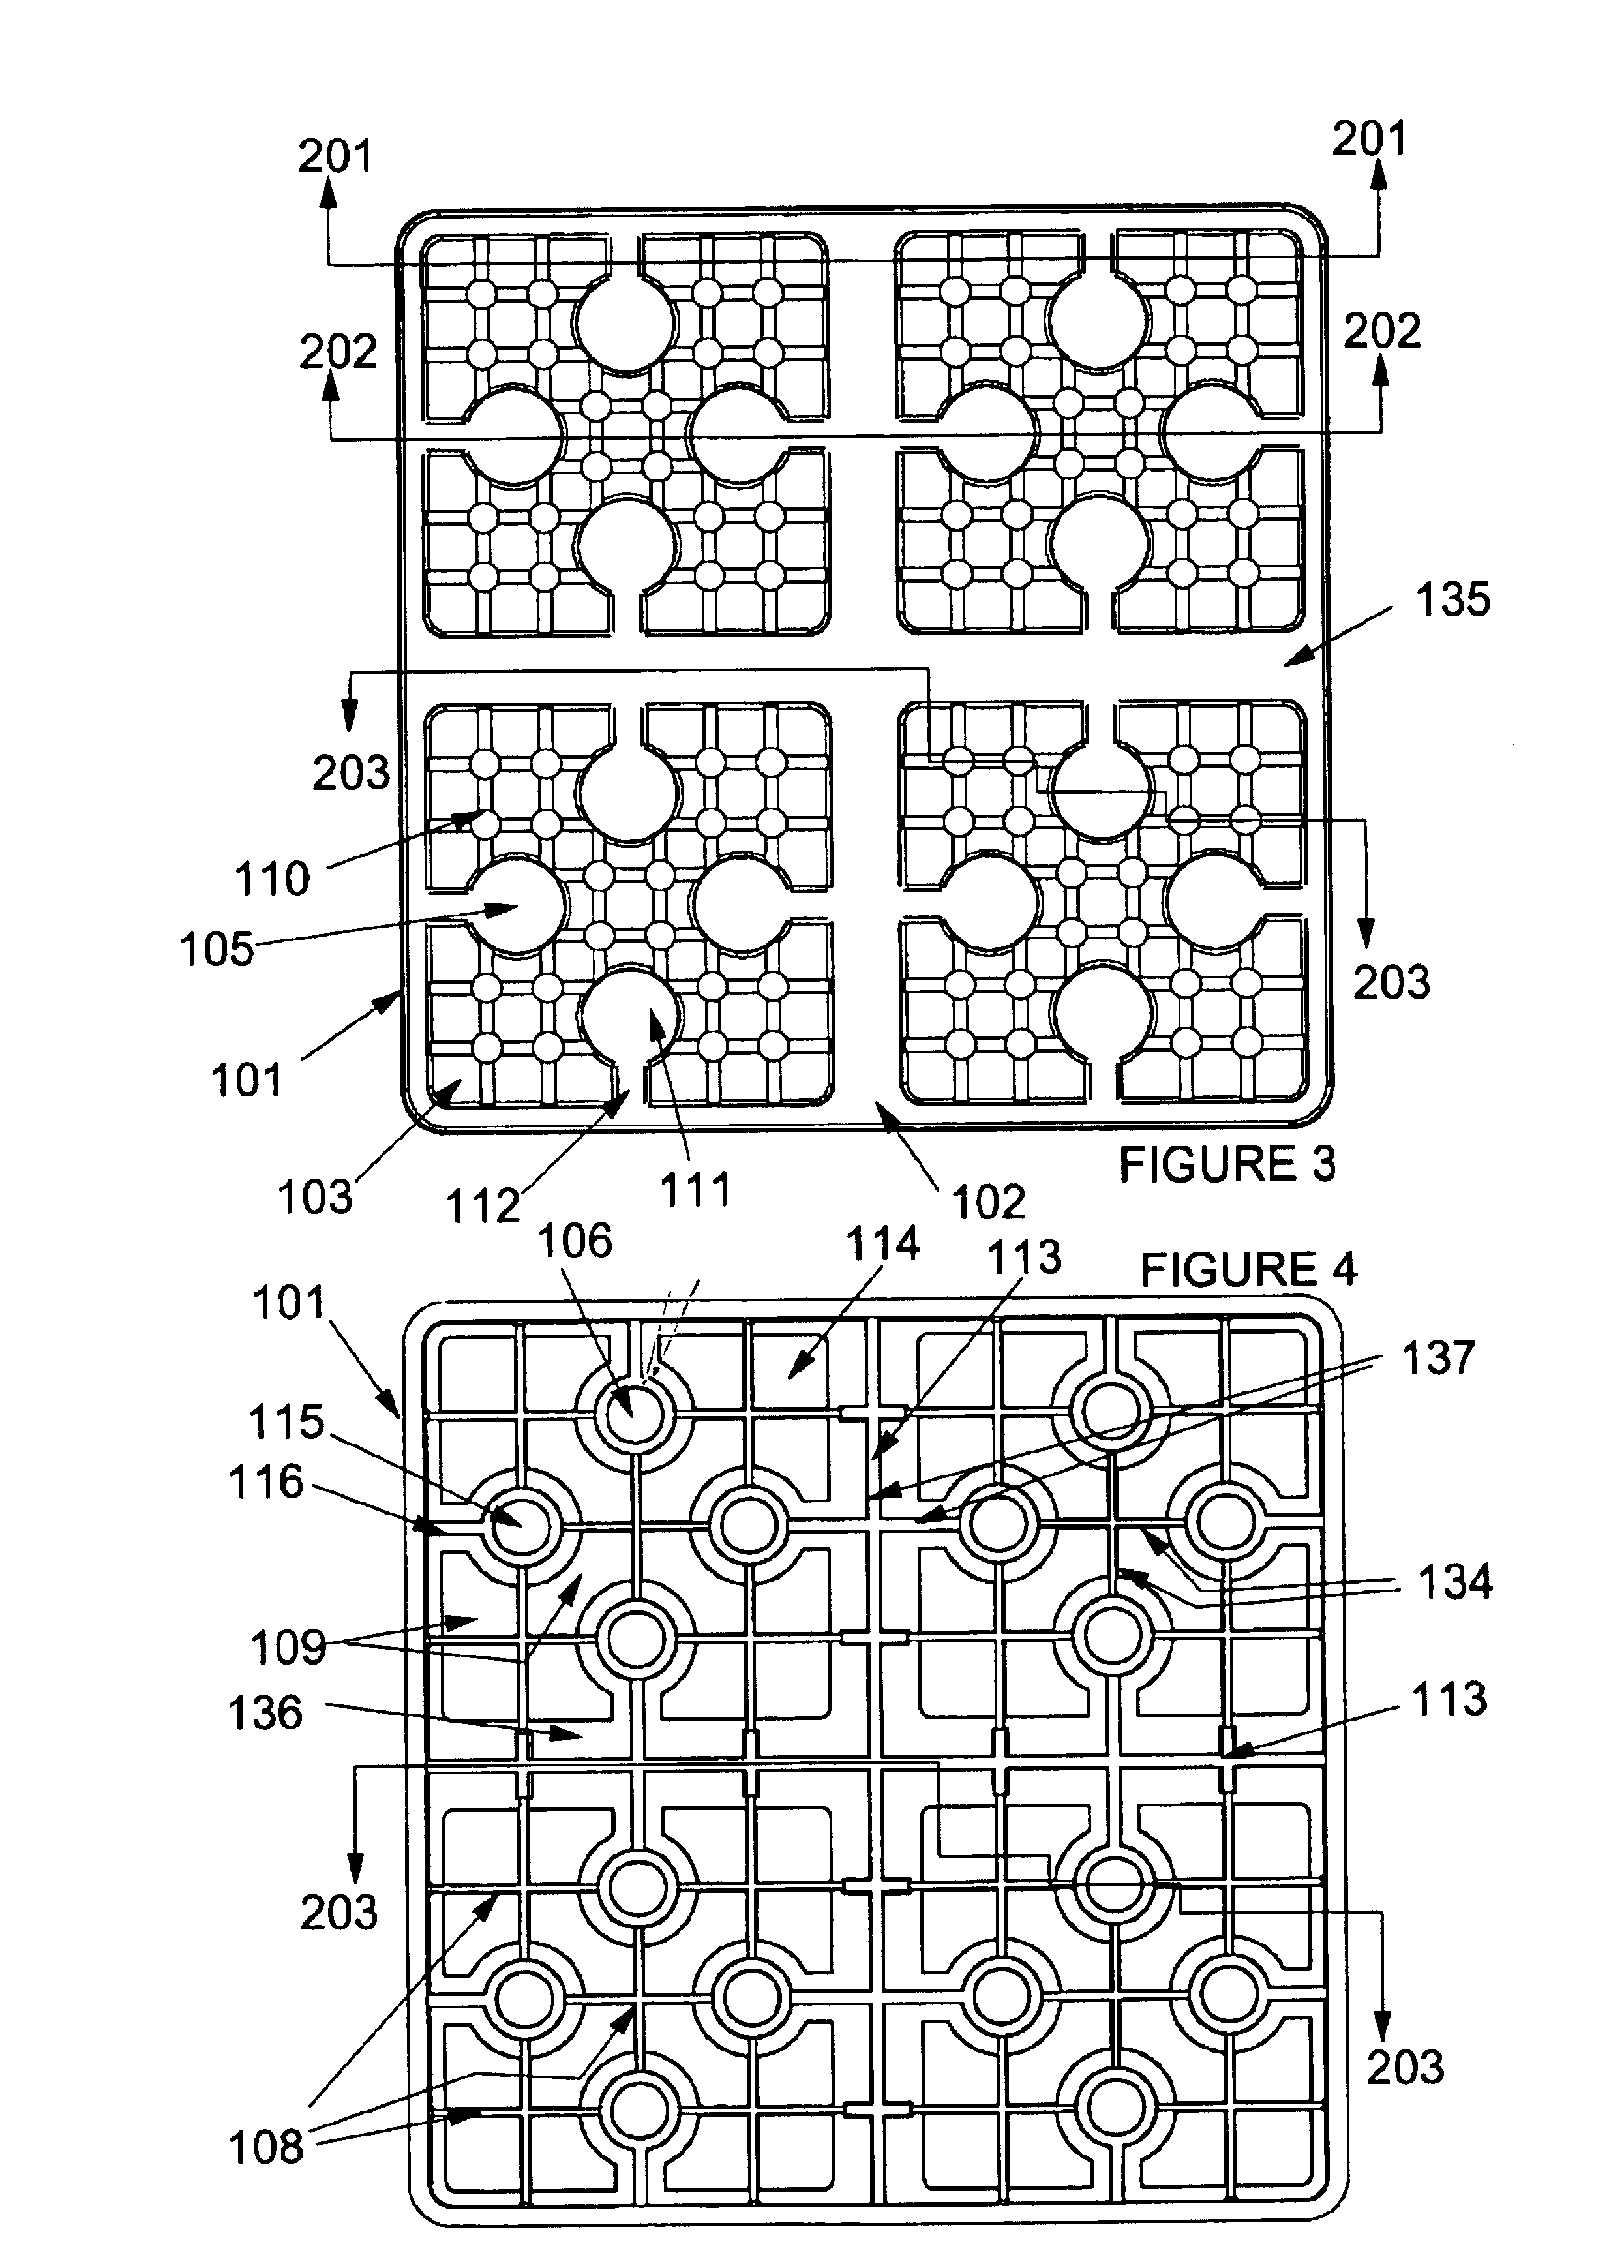 Leveler interlocking blocks